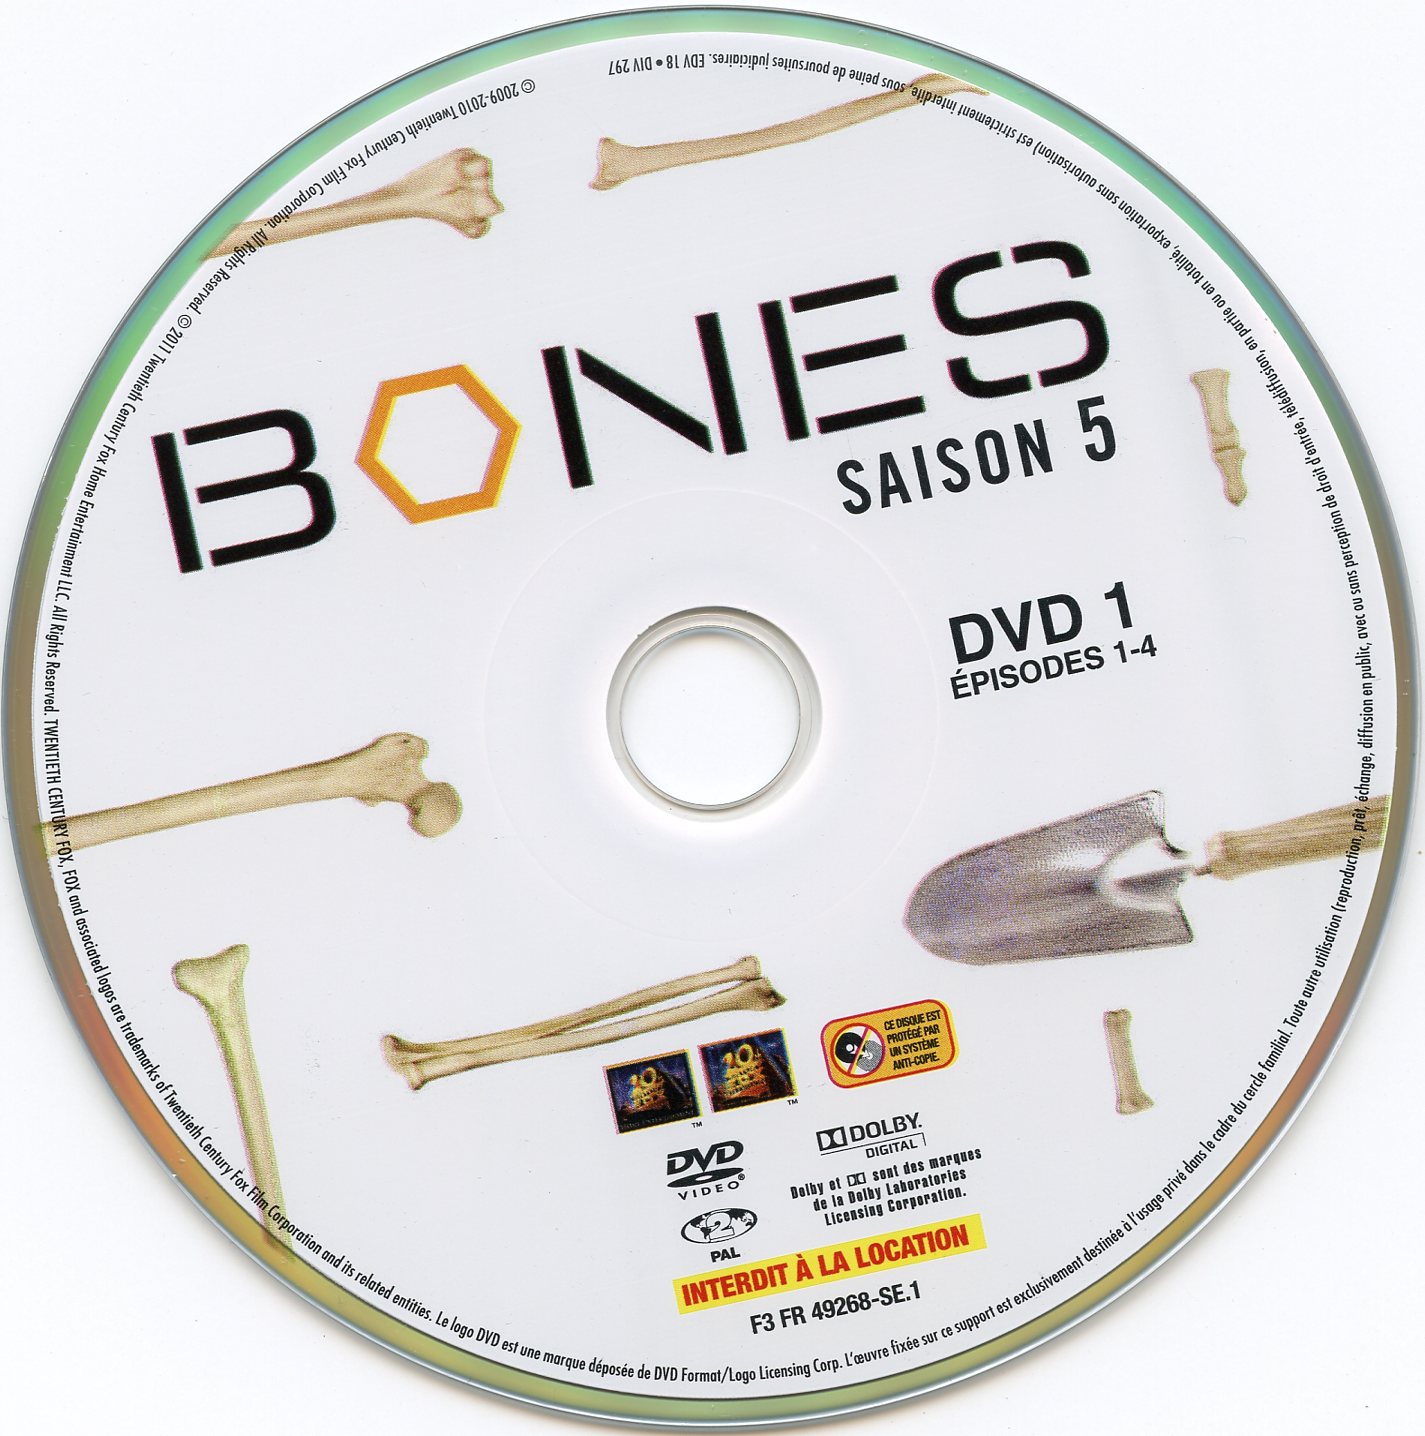 Bones Saison 5 DVD 1